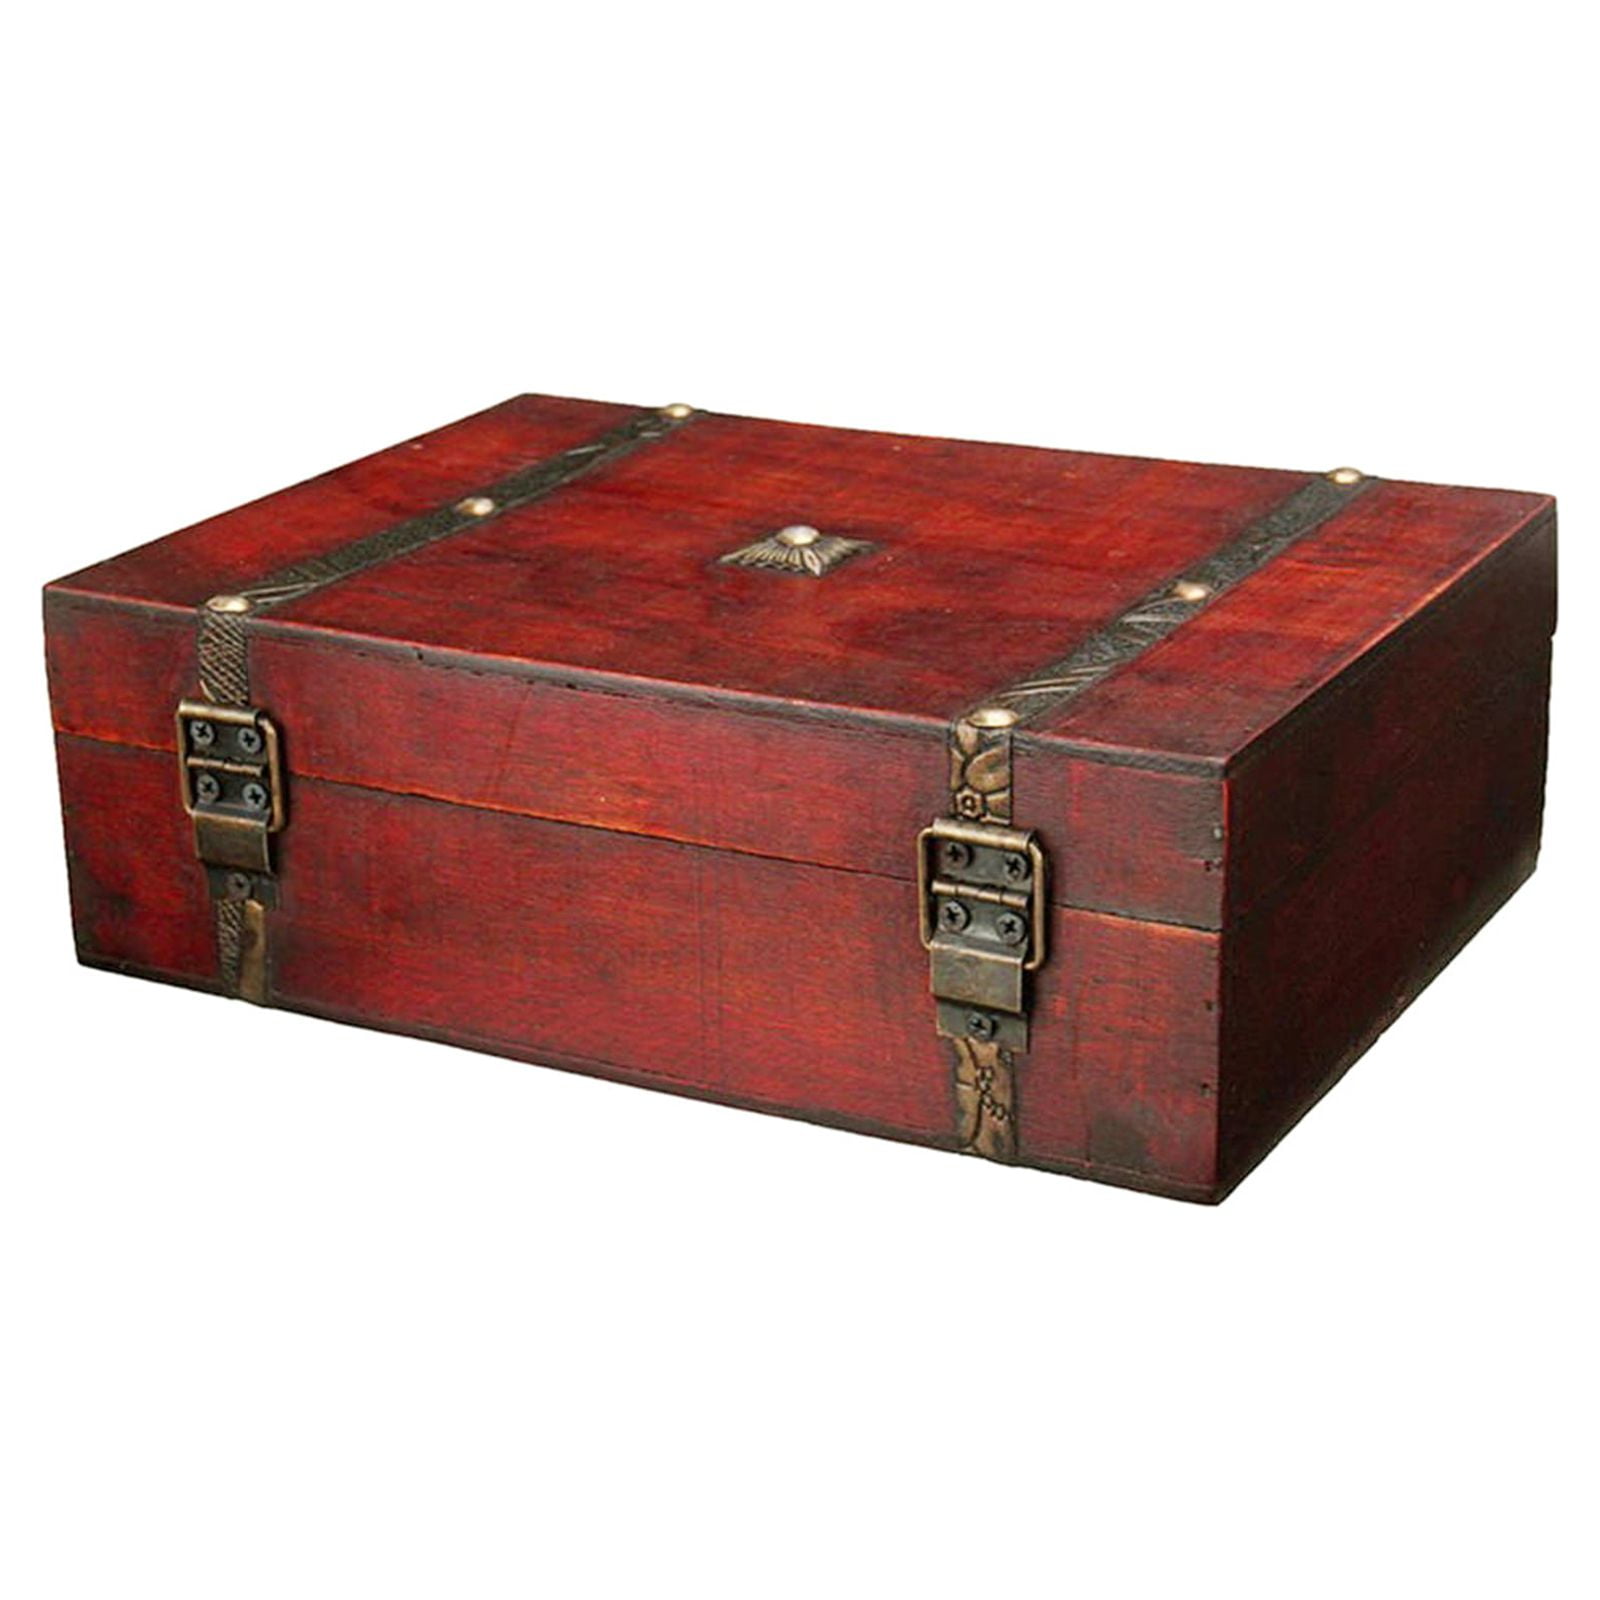 Hilitand Pirate Treasure Chest Vintage Handmade Decorative Wooden Box Trinket Jewelry Storage Case Home Decoration(Map)